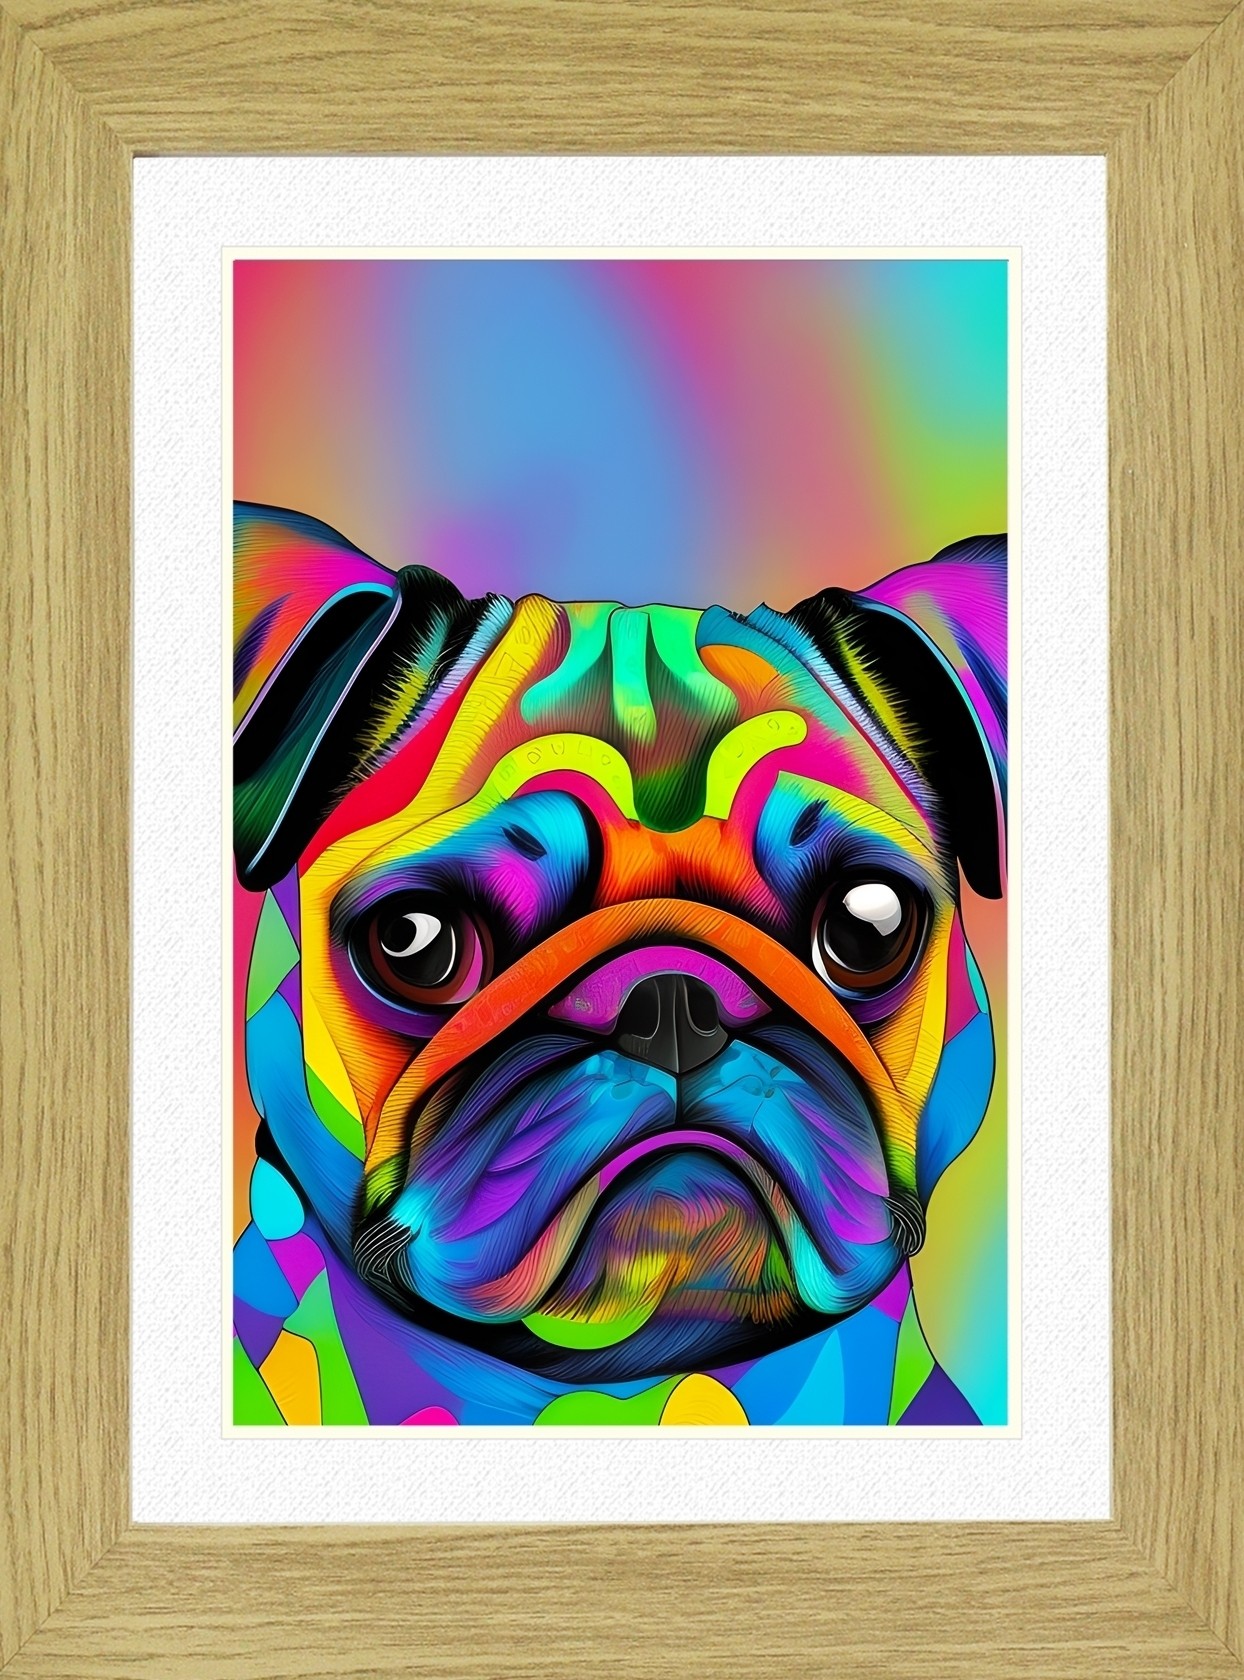 Pug Dog Picture Framed Colourful Abstract Art (25cm x 20cm Light Oak Frame)